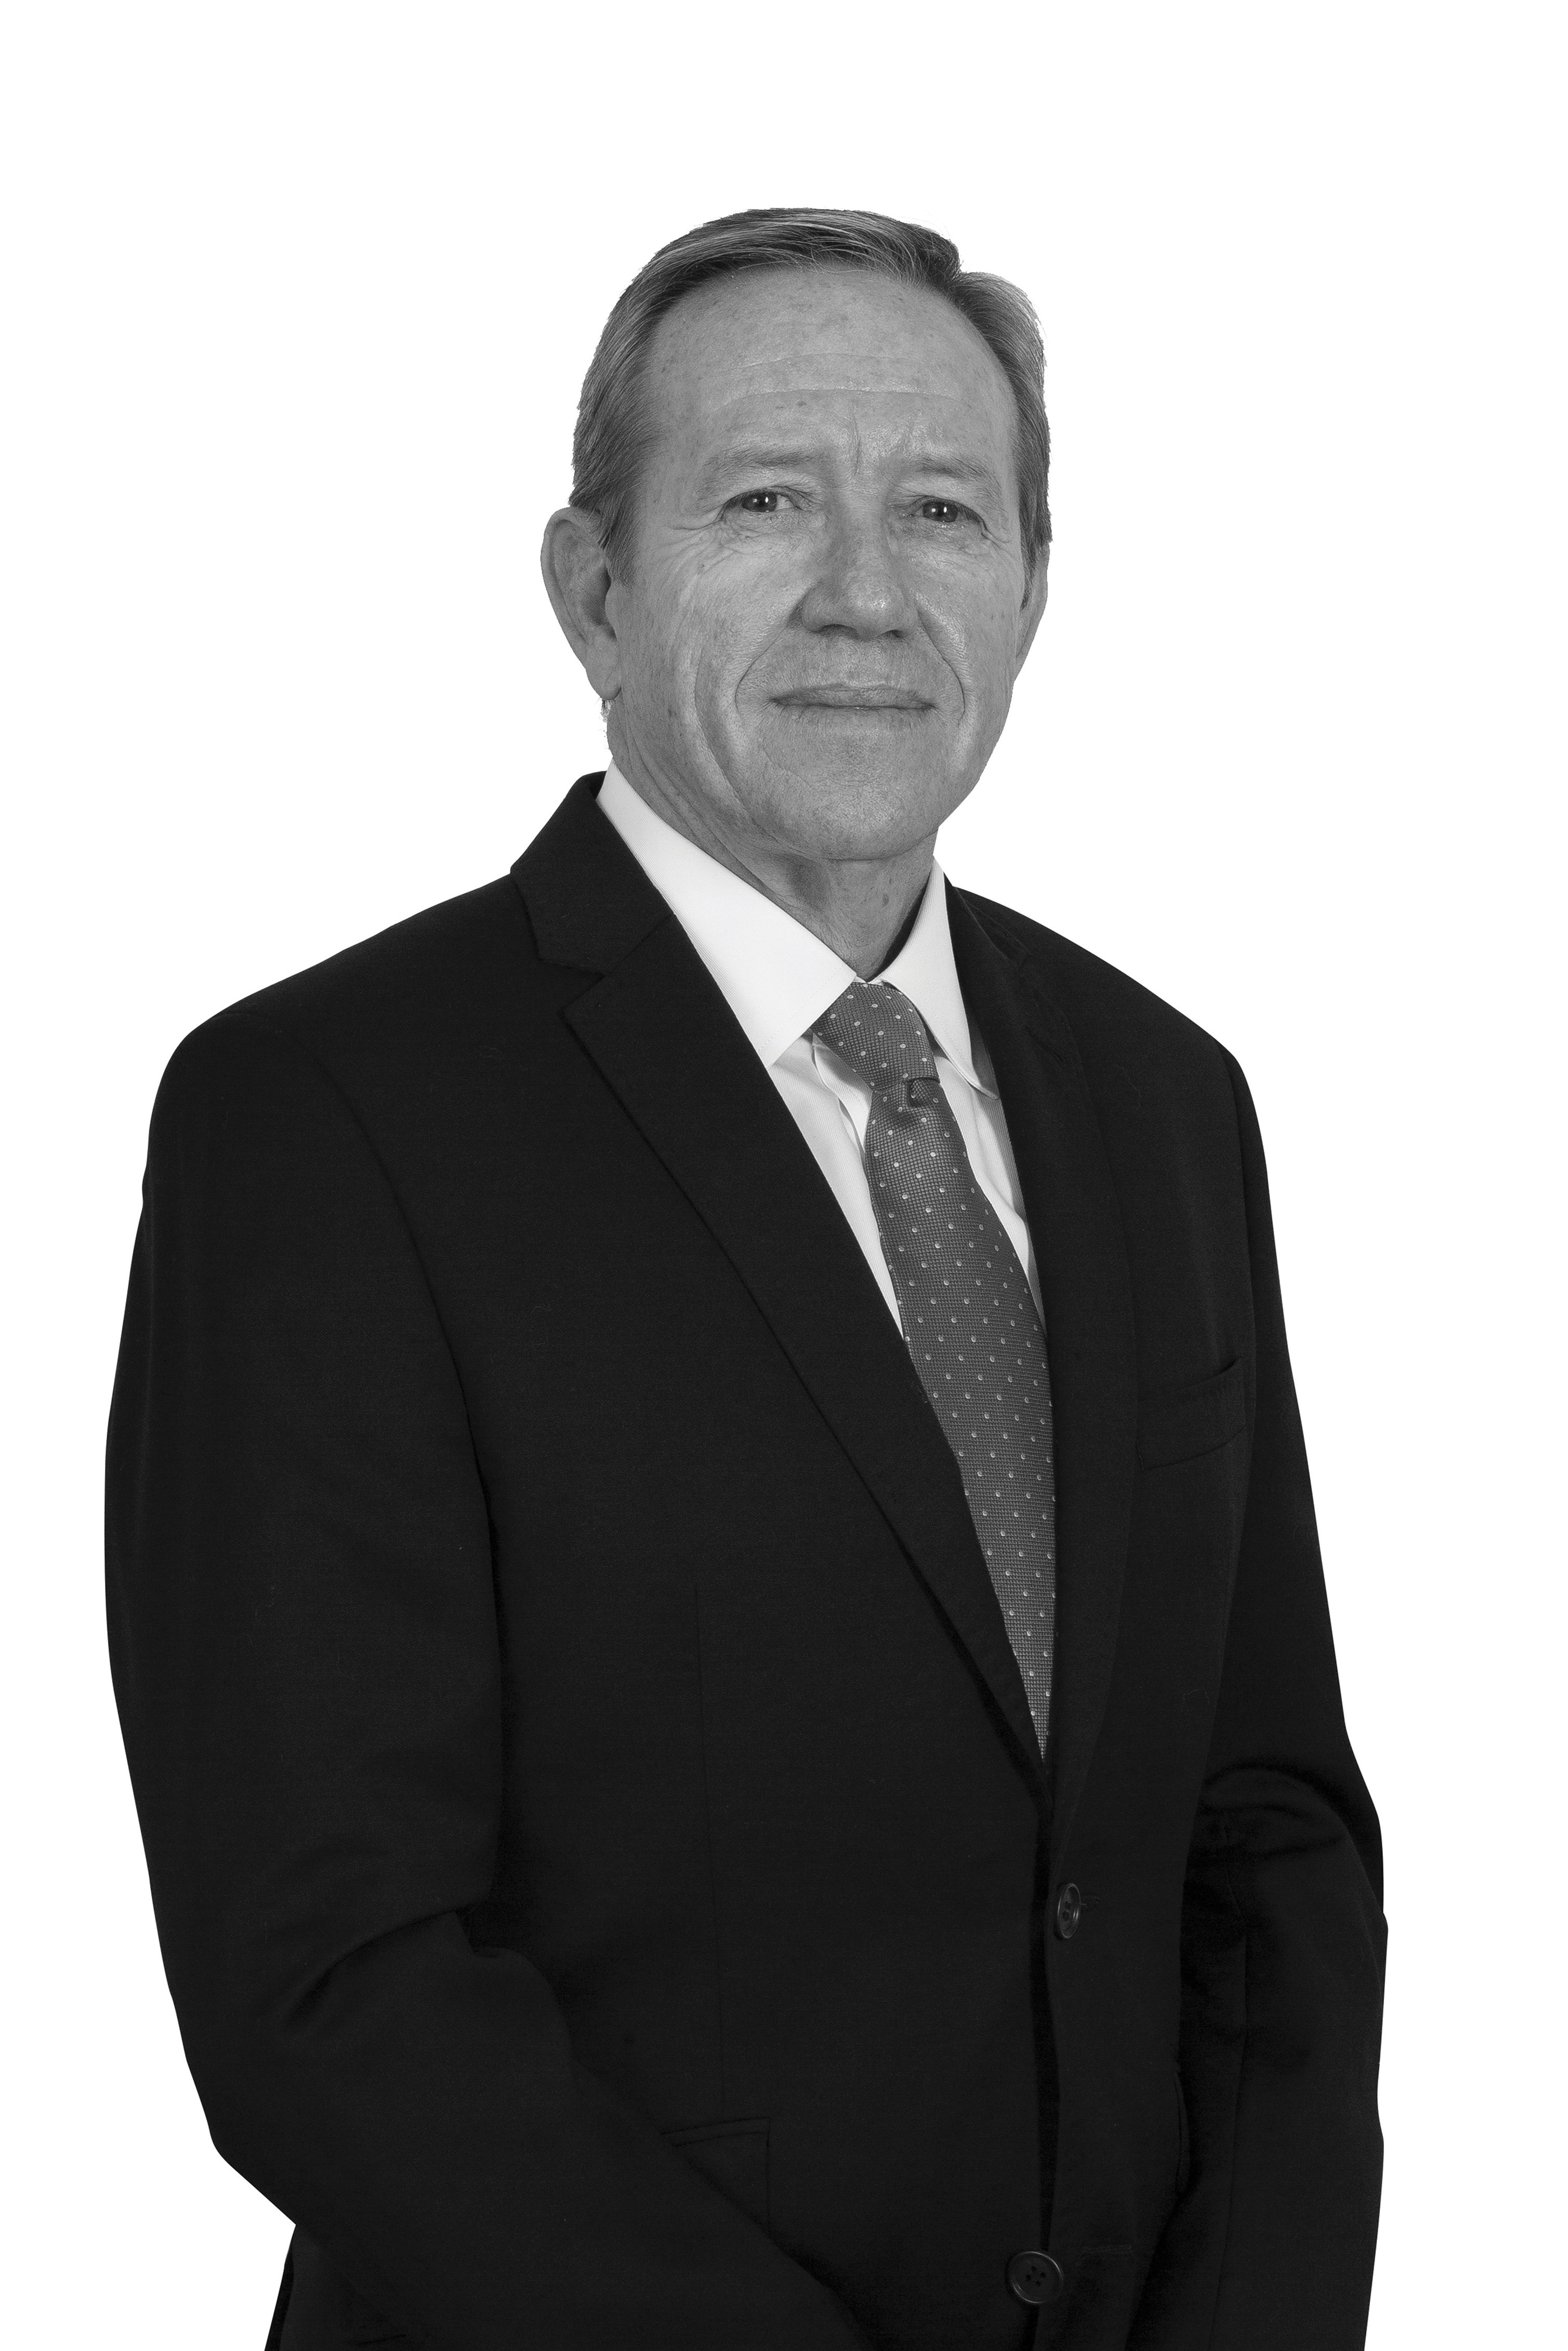 Greg Albert, CEO and managing director